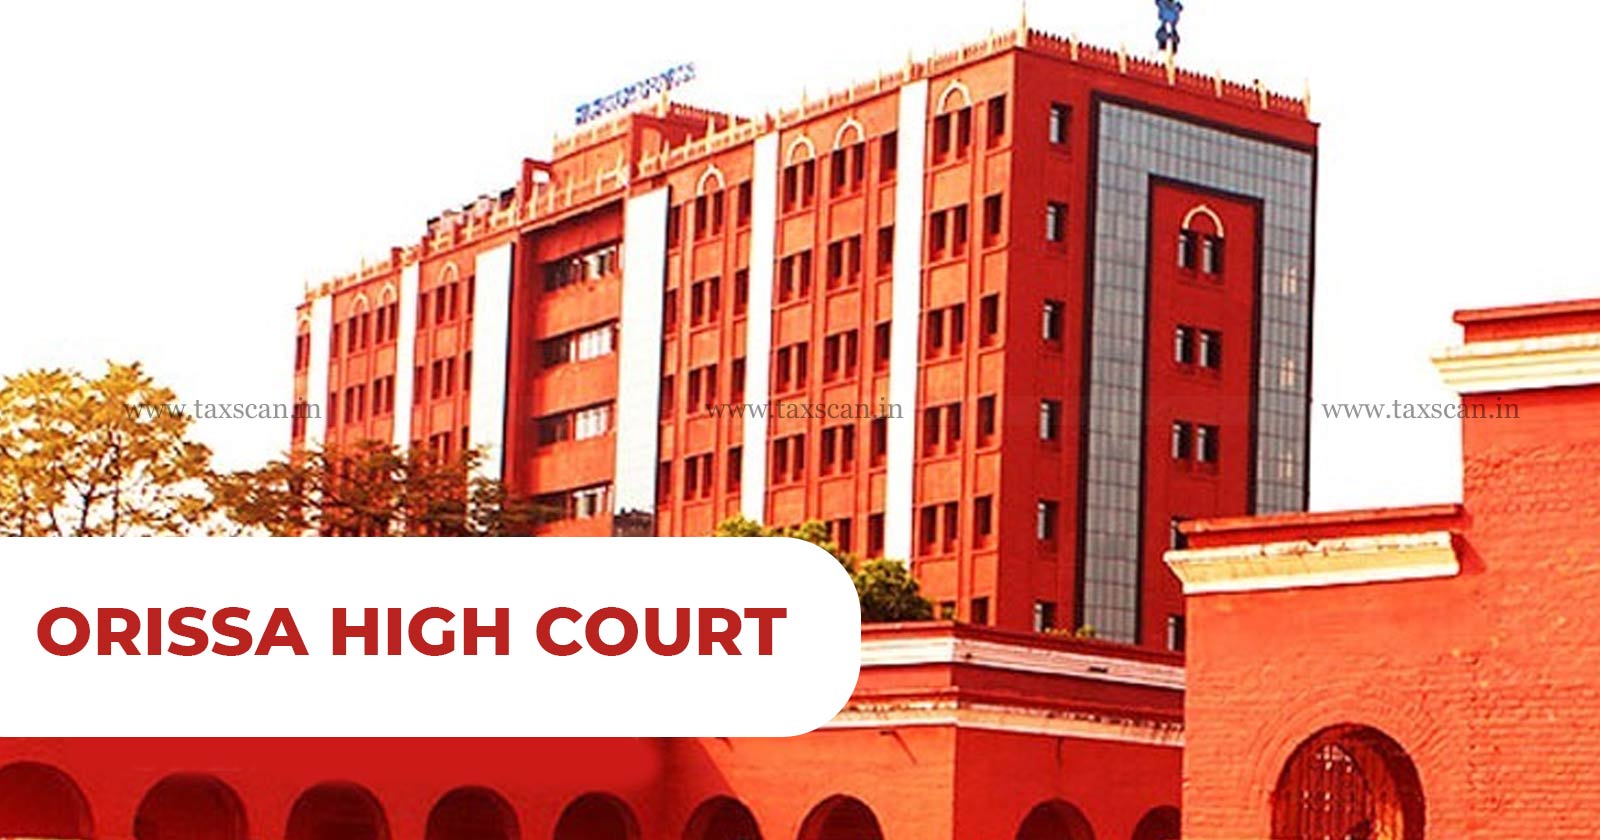 partner - Agency - Orissa High Court - allotment - e-tender - taxscan